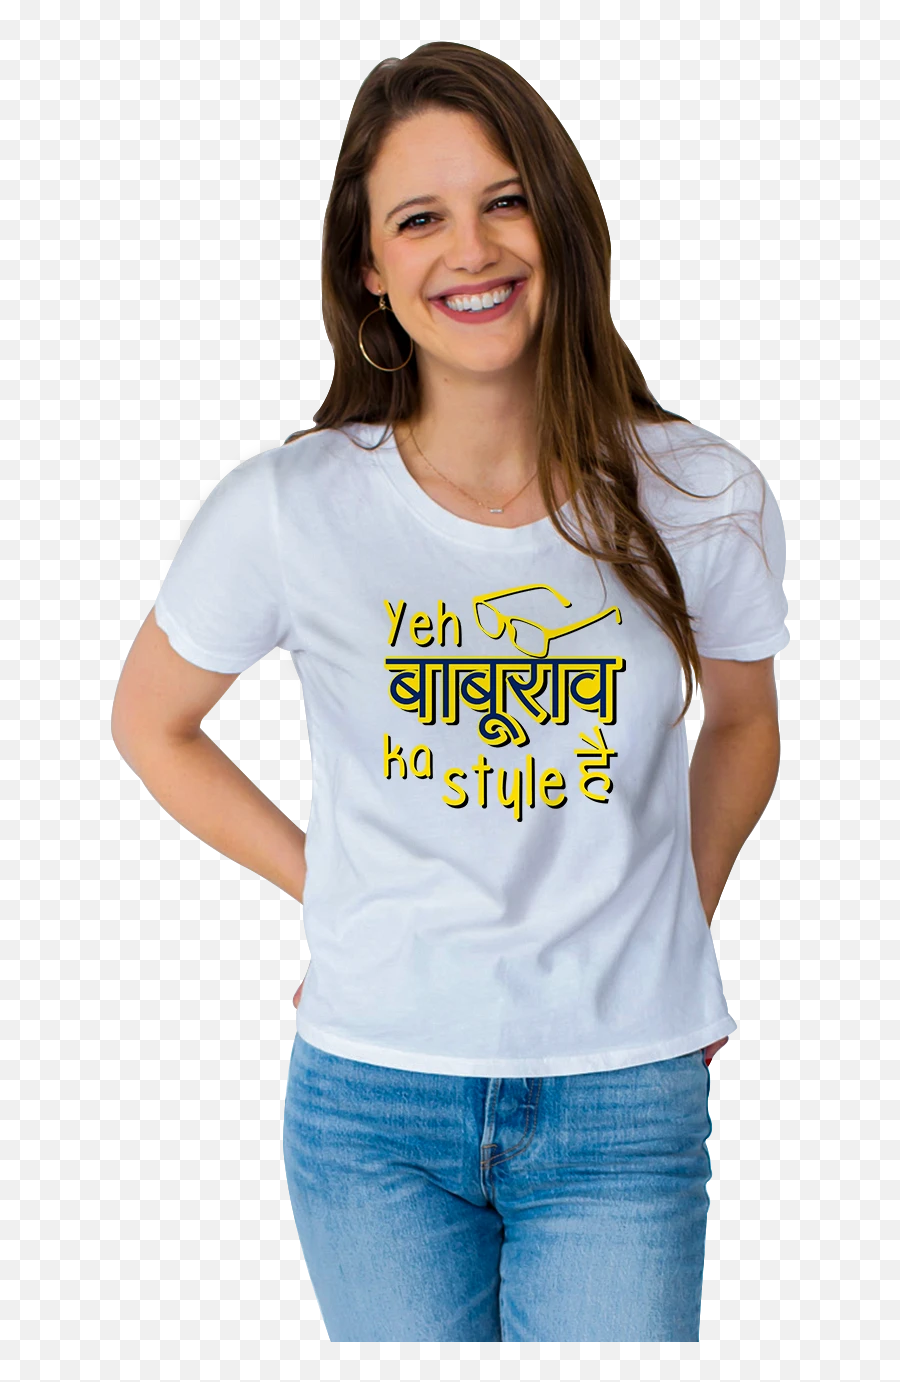 Official Licensed Emoji Printed T - Shirt For Women Heart Eyes Girl,Emoji Shirts And Pants